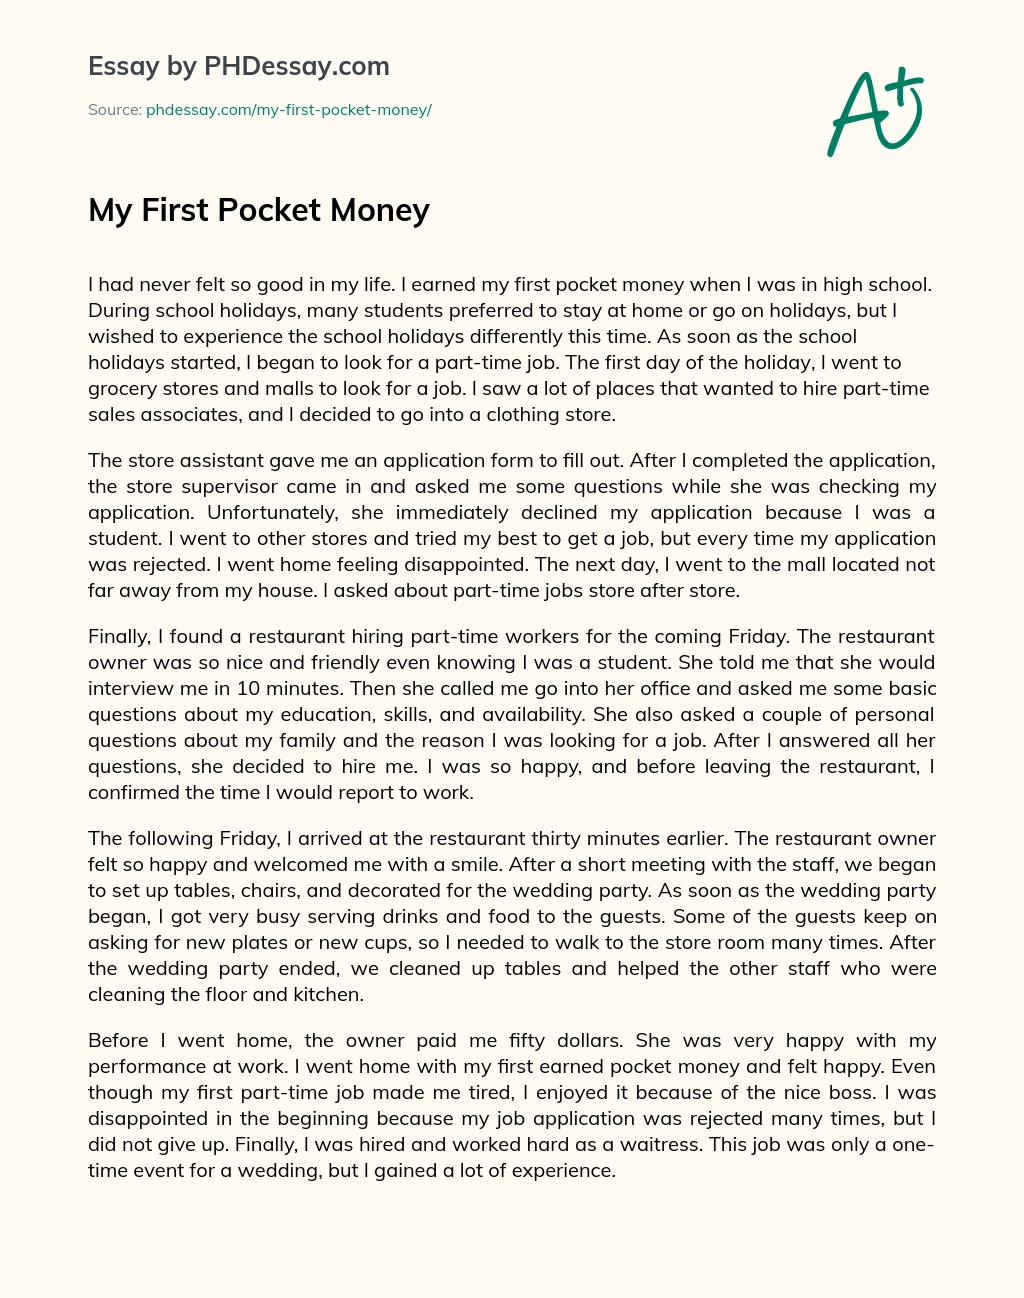 essay on a pocket money